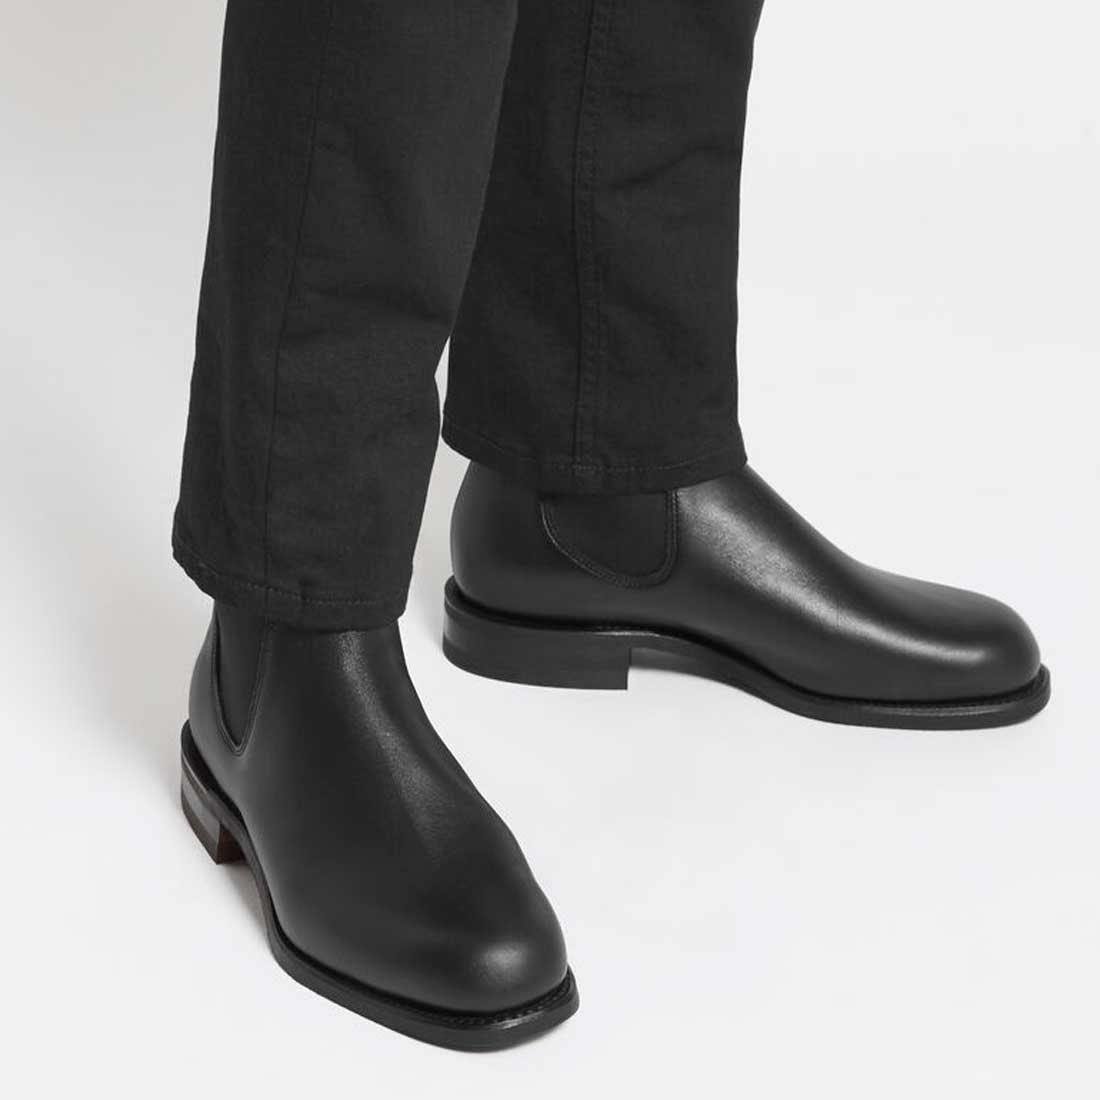 RM WILLIAMS Comfort Turnout Boots - Men's - Black